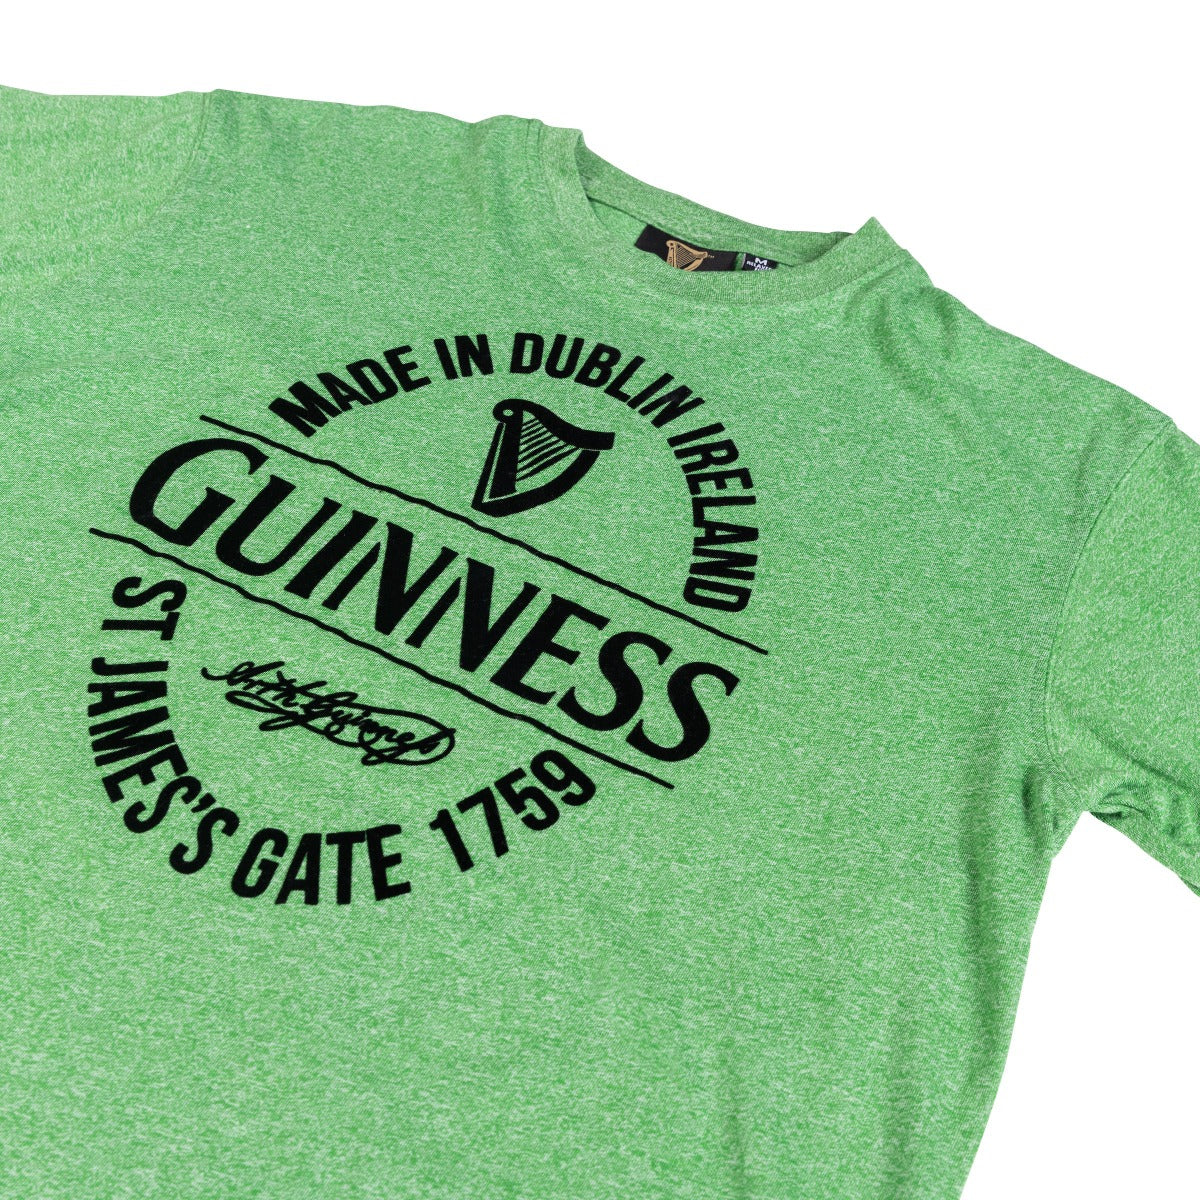 Guinness St.James's Gate 1759, 100% Cotton T-shirt